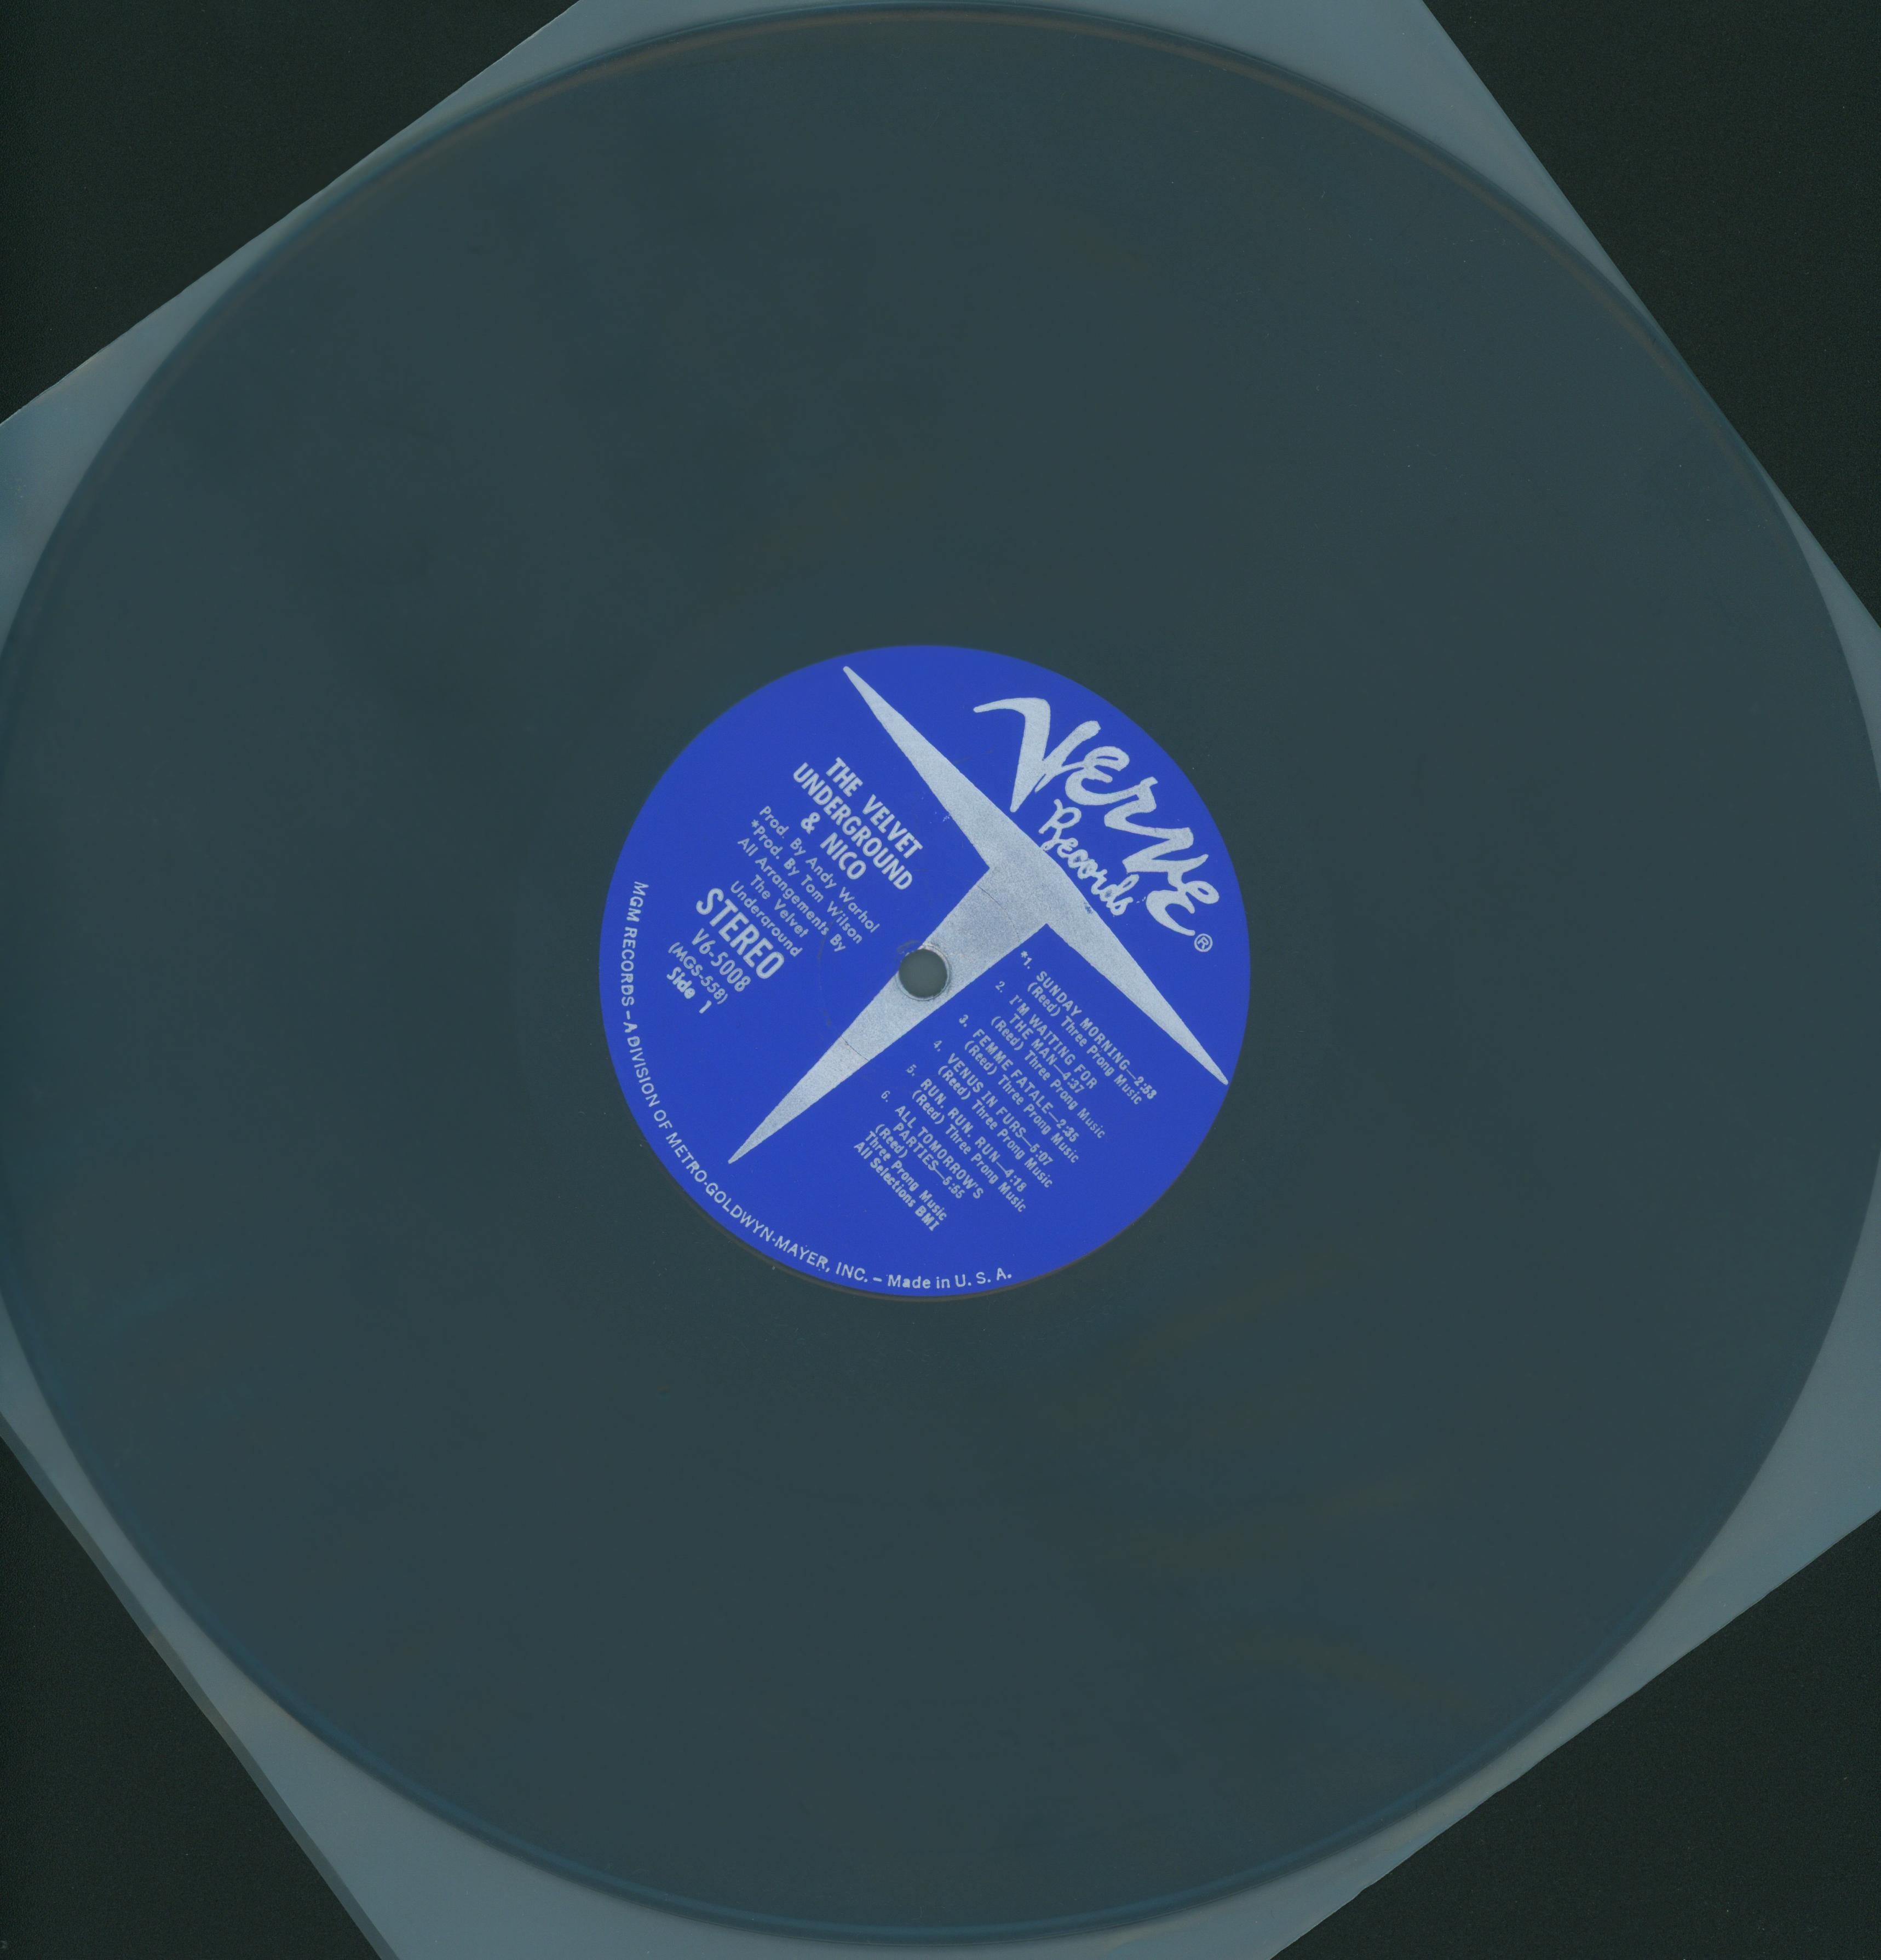 Andy Warhol Banana: Nico & The Velvet Underground Vinyl Record (set of 4 works) 5